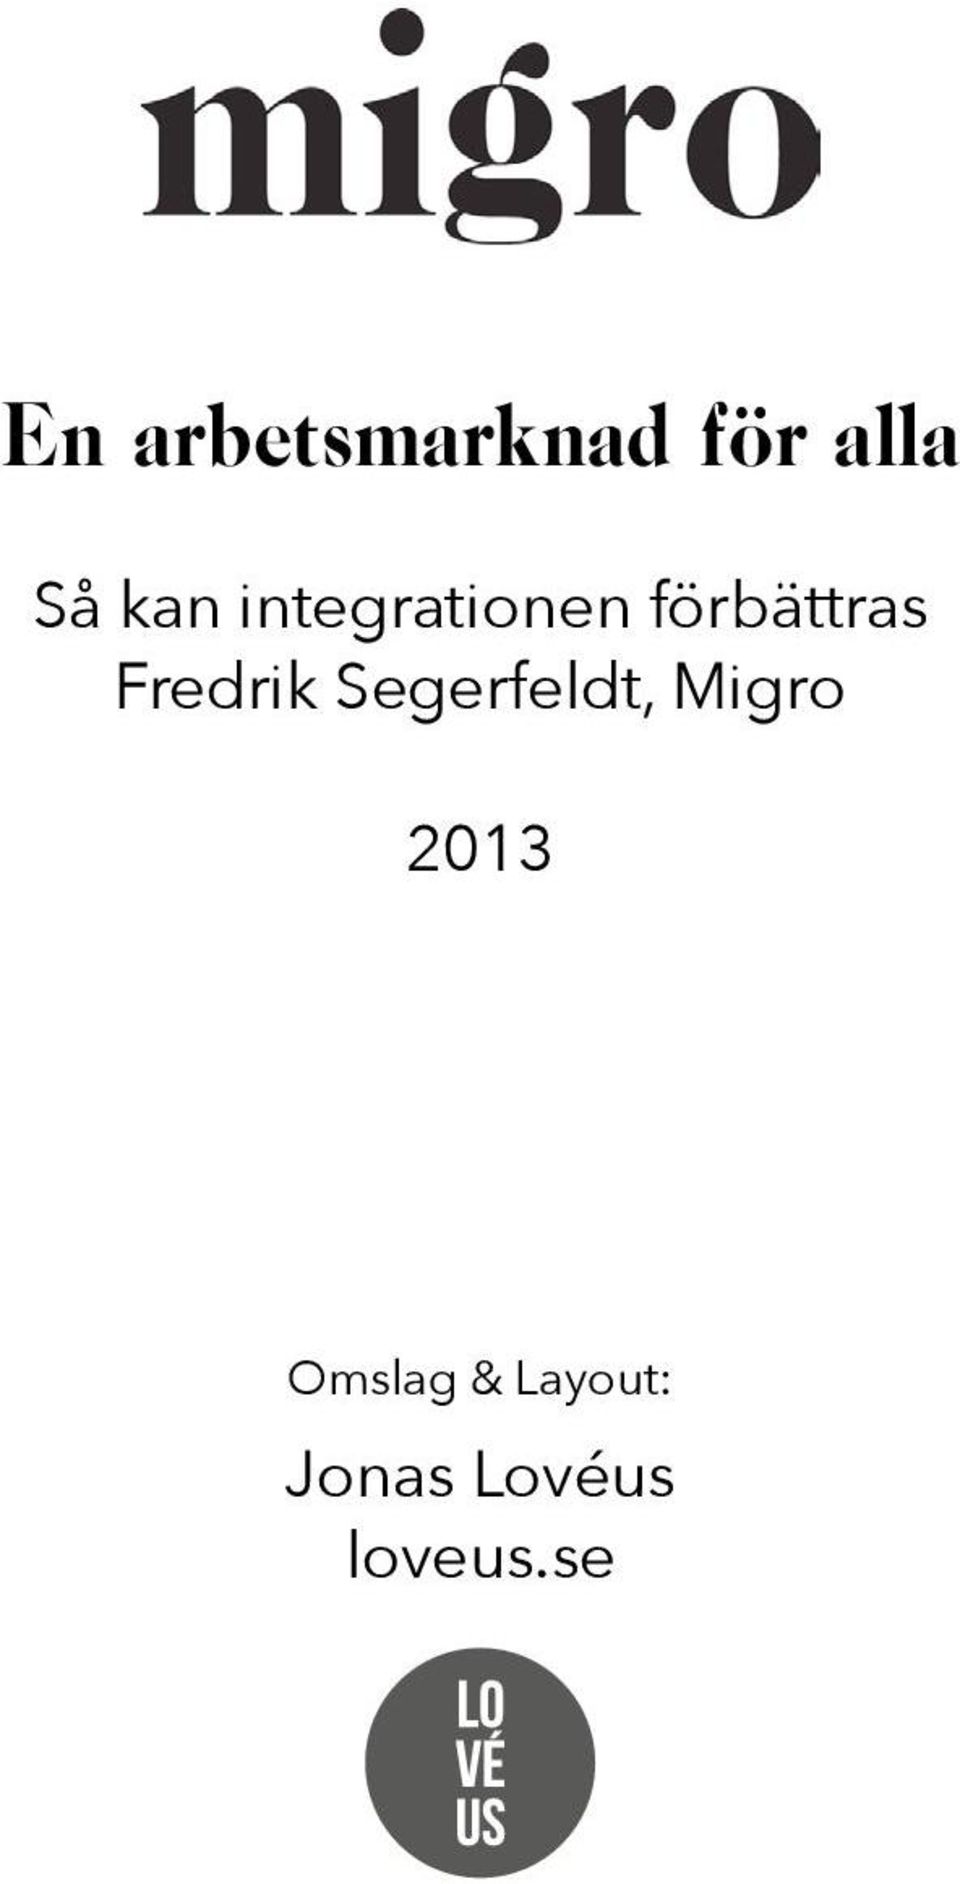 Fredrik Segerfeldt, Migro 2013